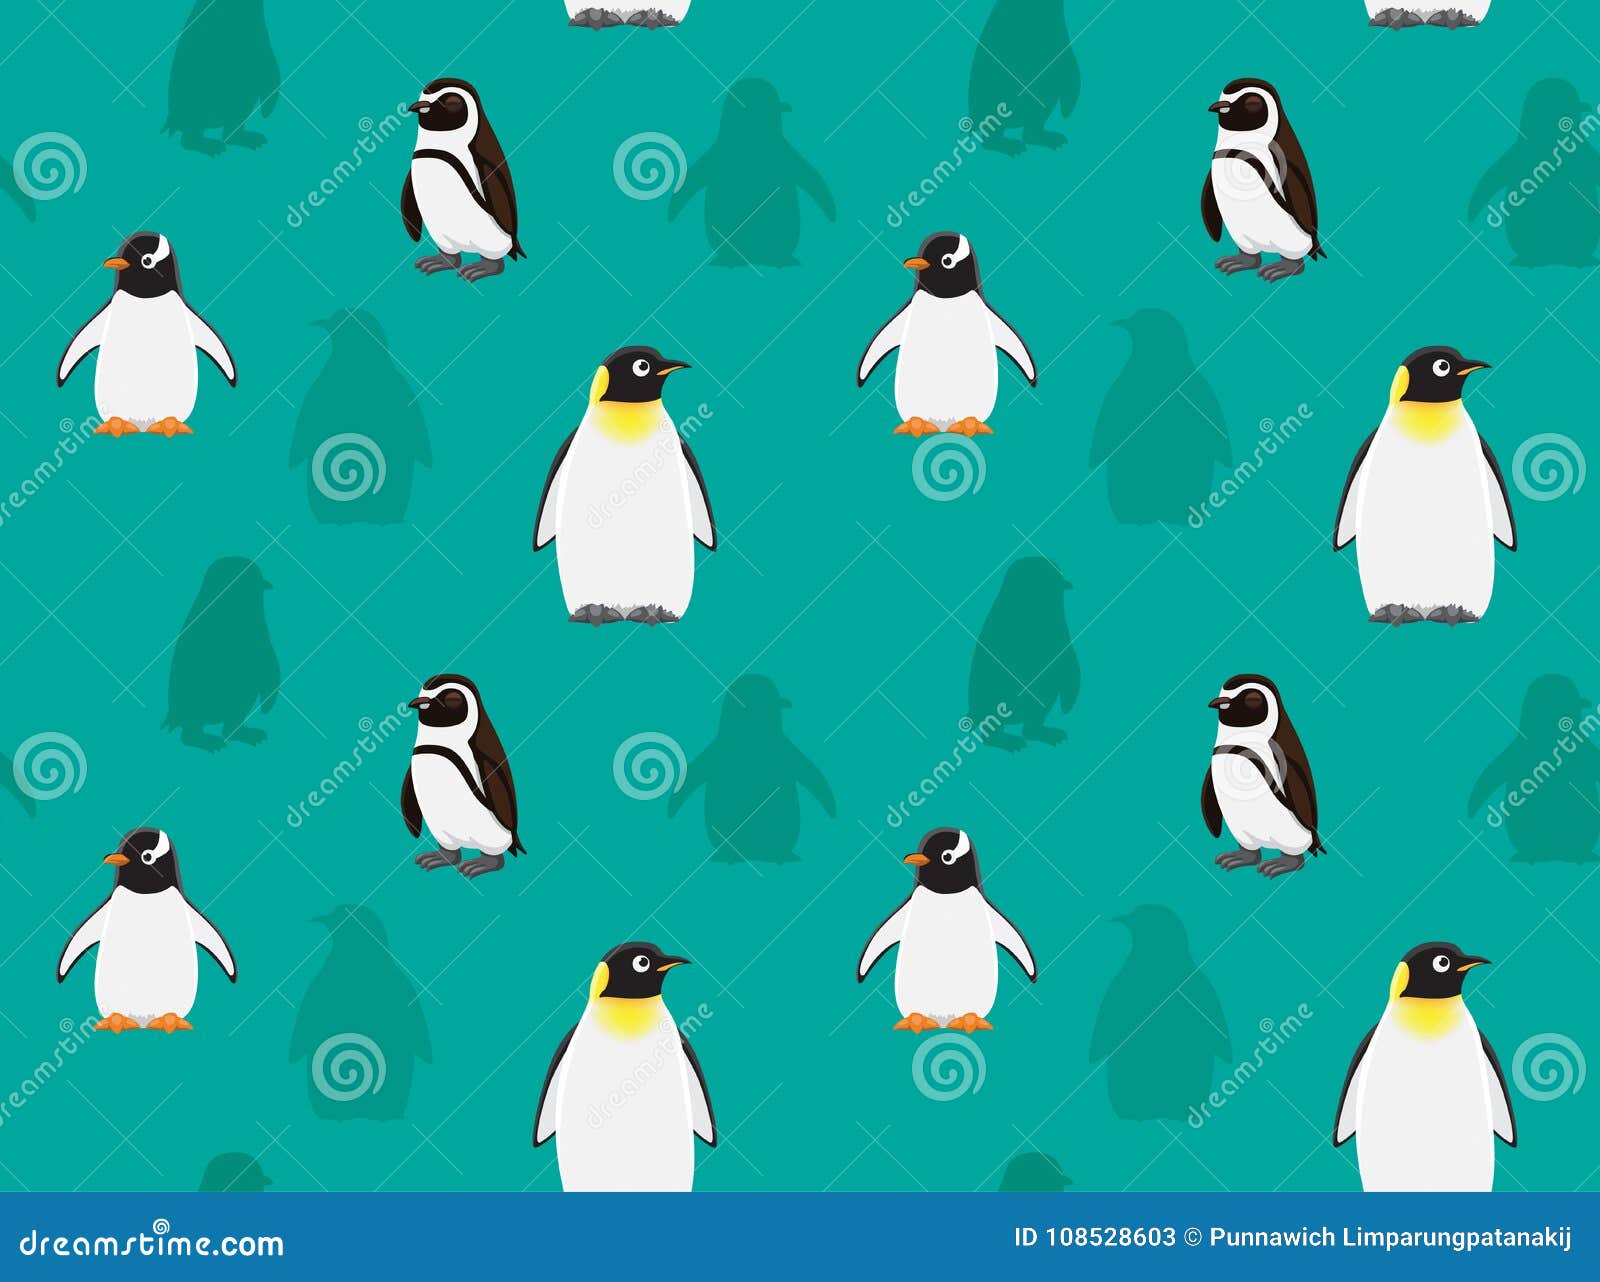 Penguin Wallpaper 6 stock vector. Illustration of cute - 108528603